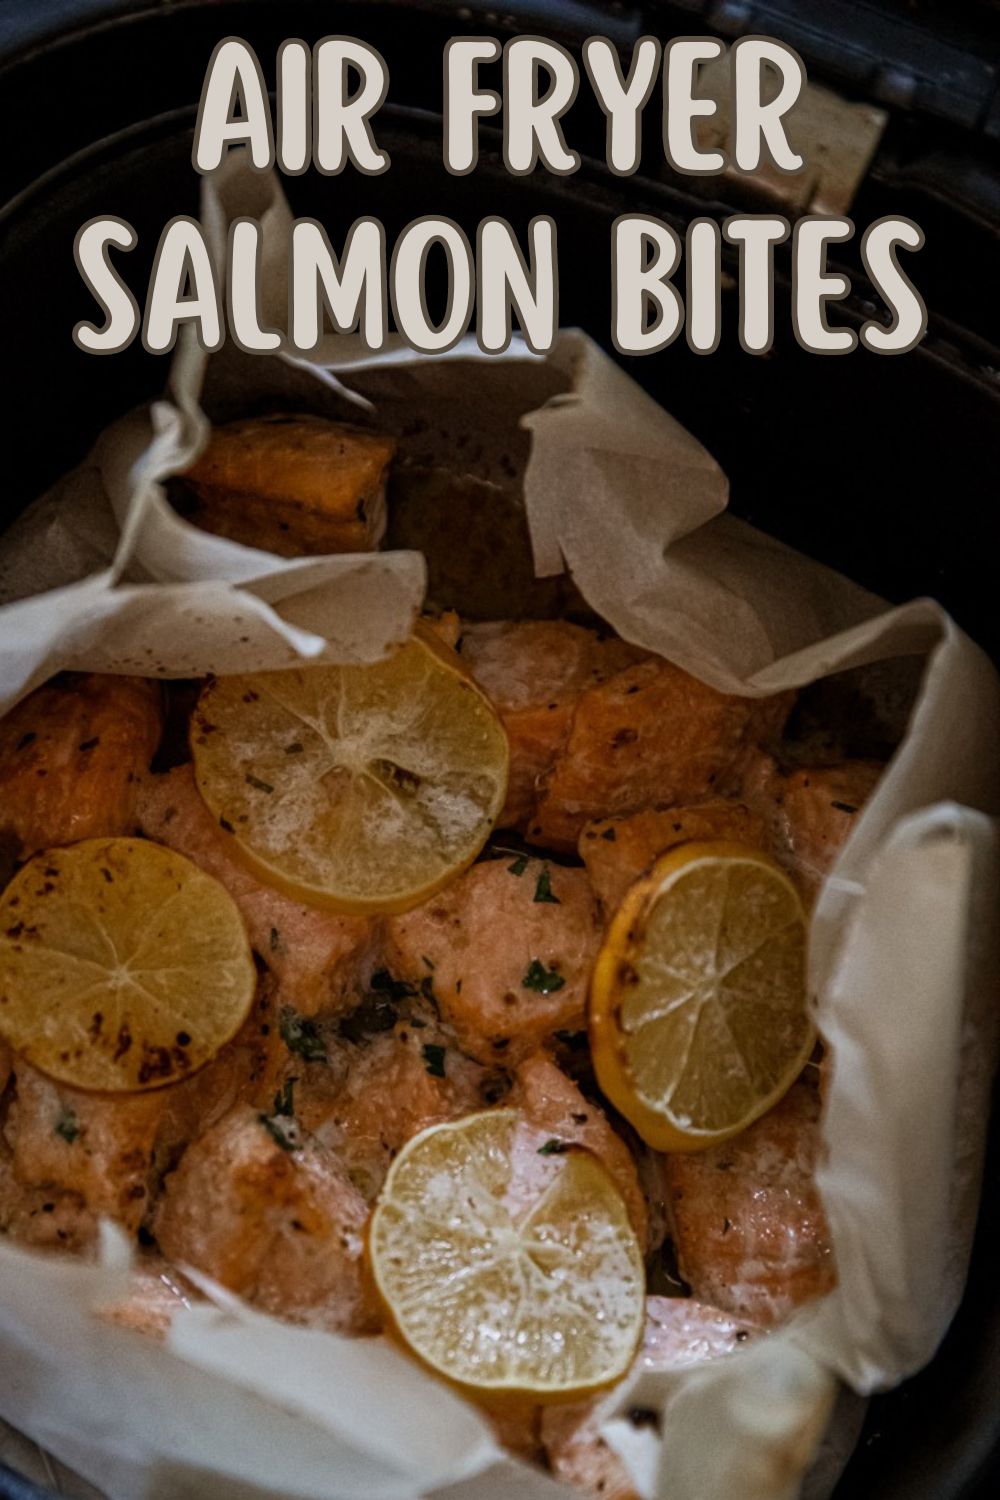 Air fryer salmon bites recipe.